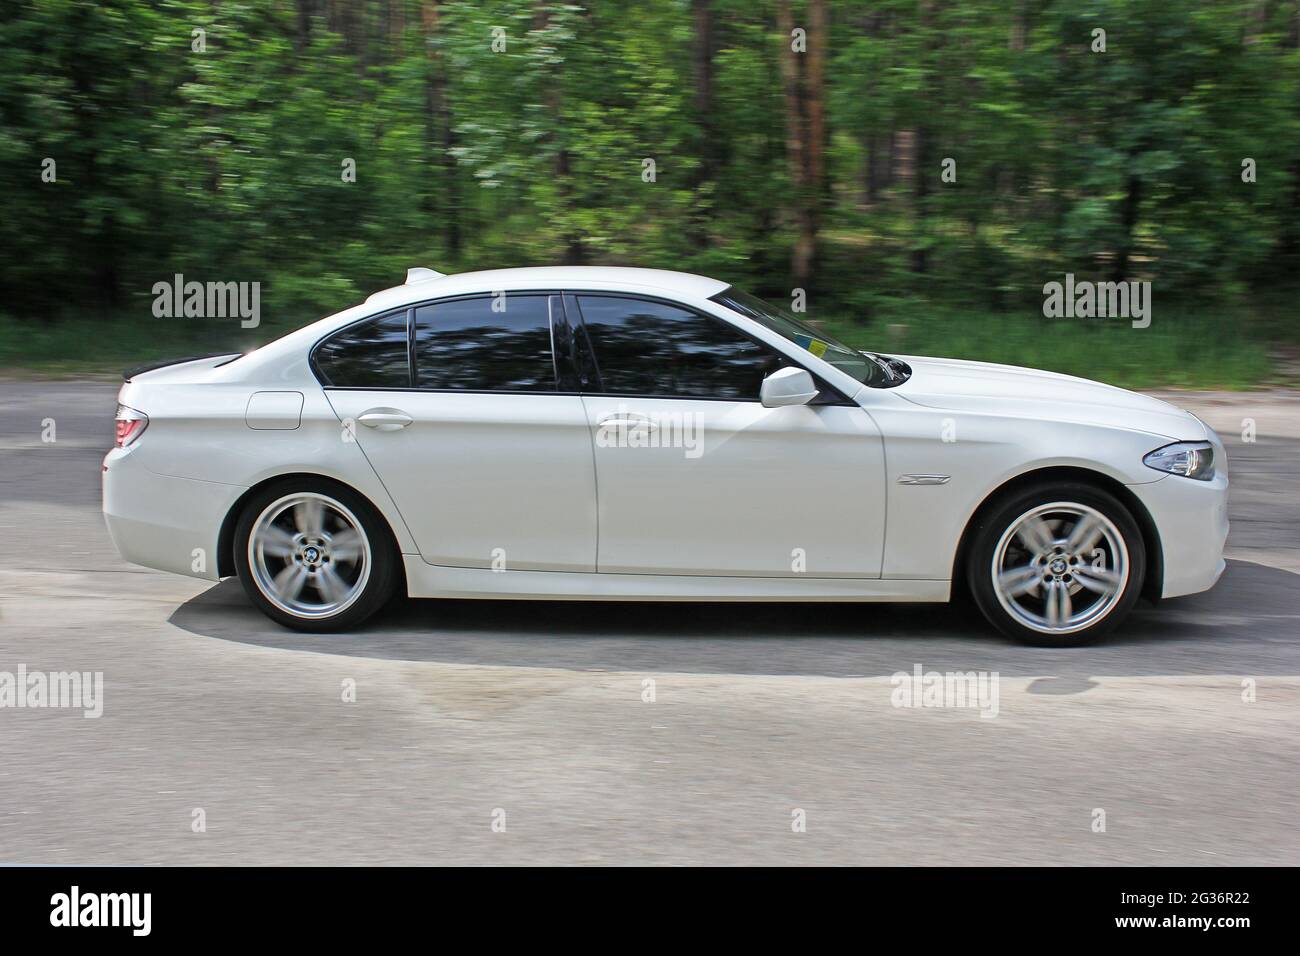 Kiev, Ukraine - May 17, 2014: White BMW 520 TDI (F10) M Sport in the forest road Stock Photo